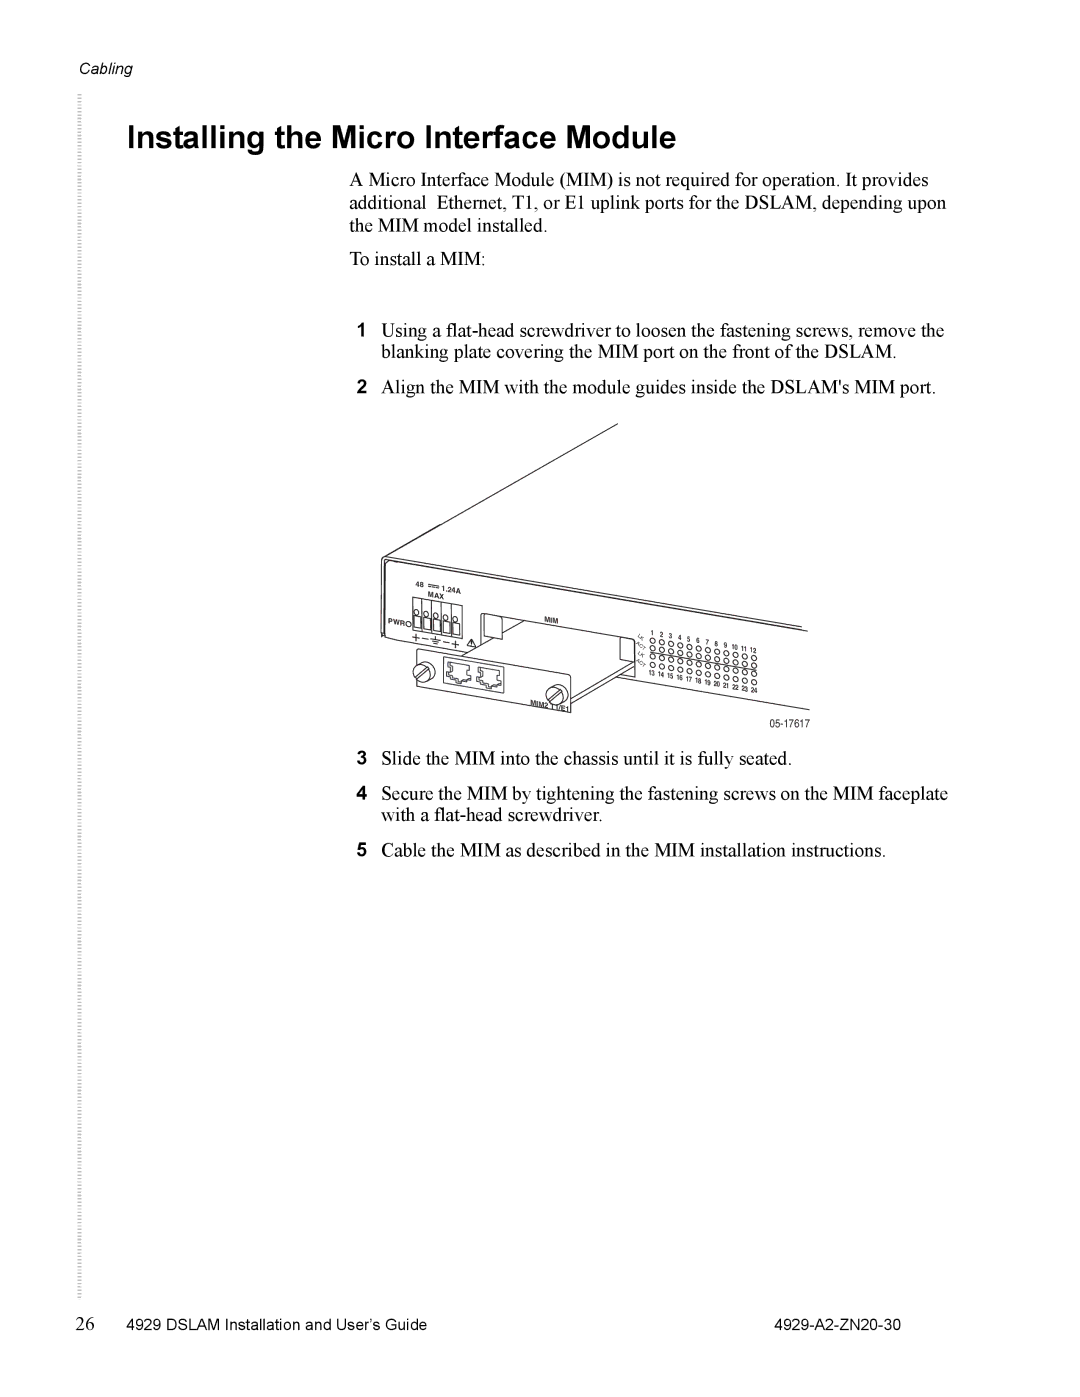 Zhone Technologies 4929 DSLAM manual Installing the Micro Interface Module 